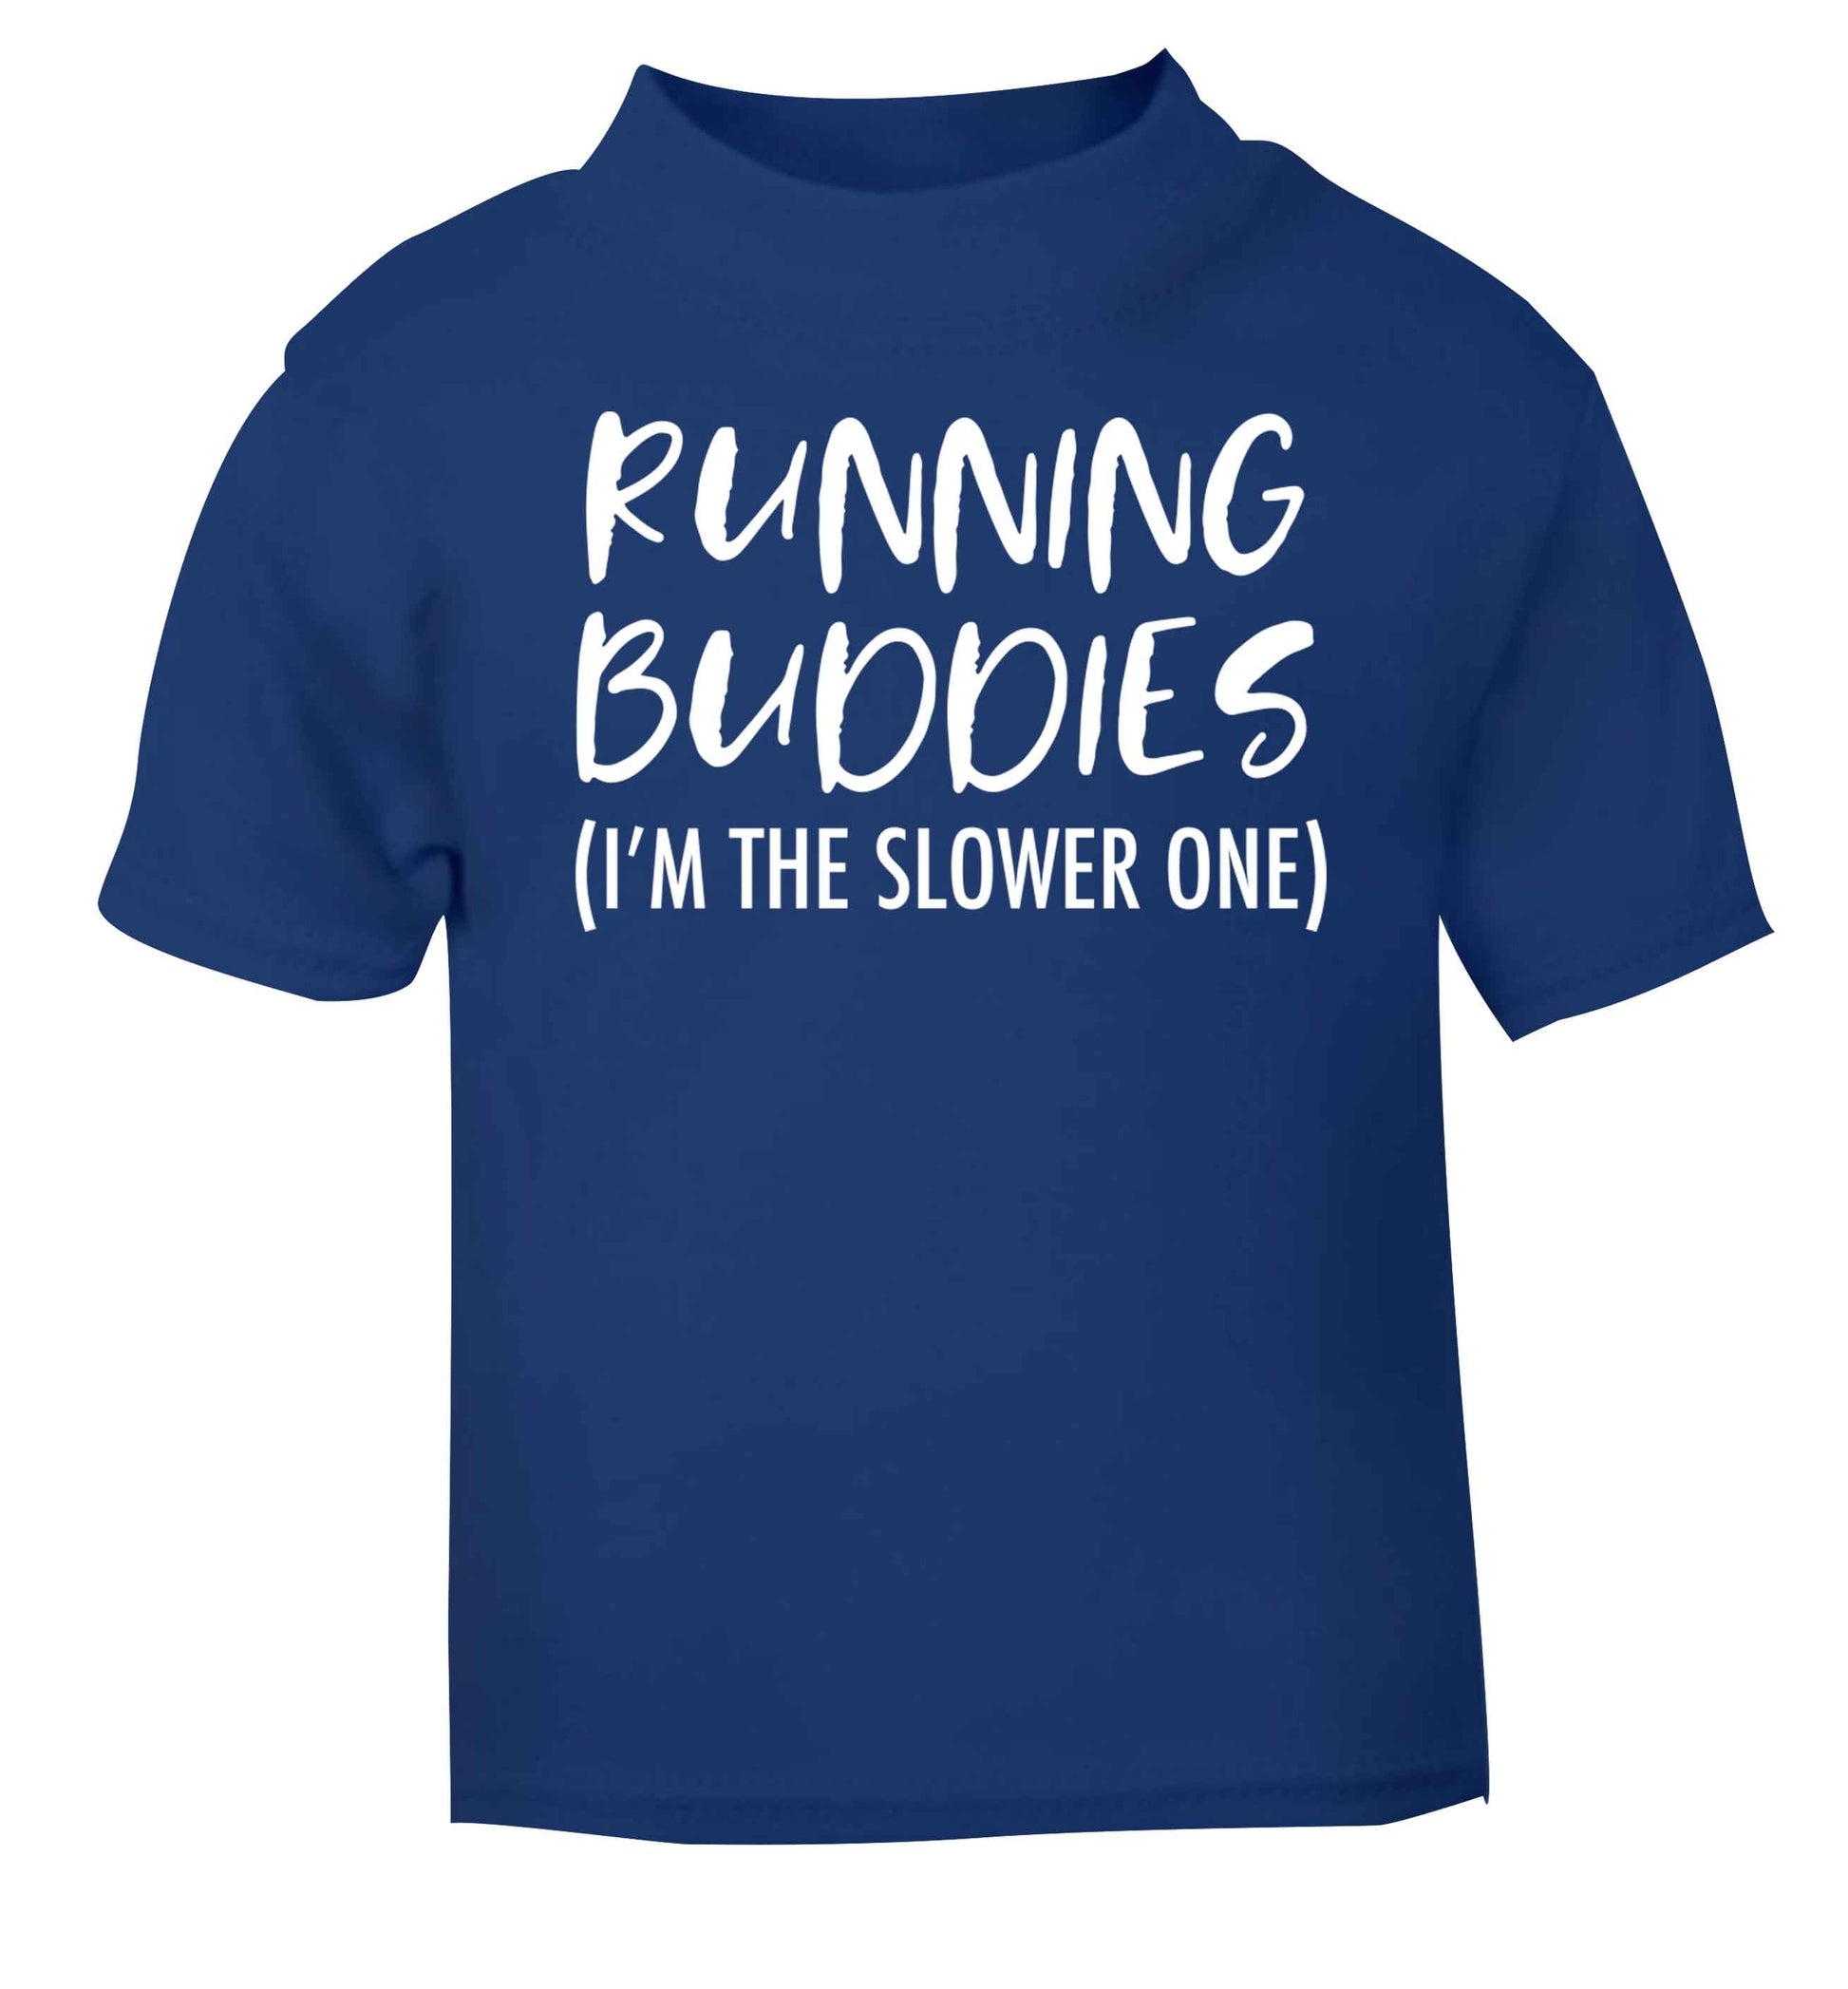 Running buddies (I'm the slower one) blue baby toddler Tshirt 2 Years